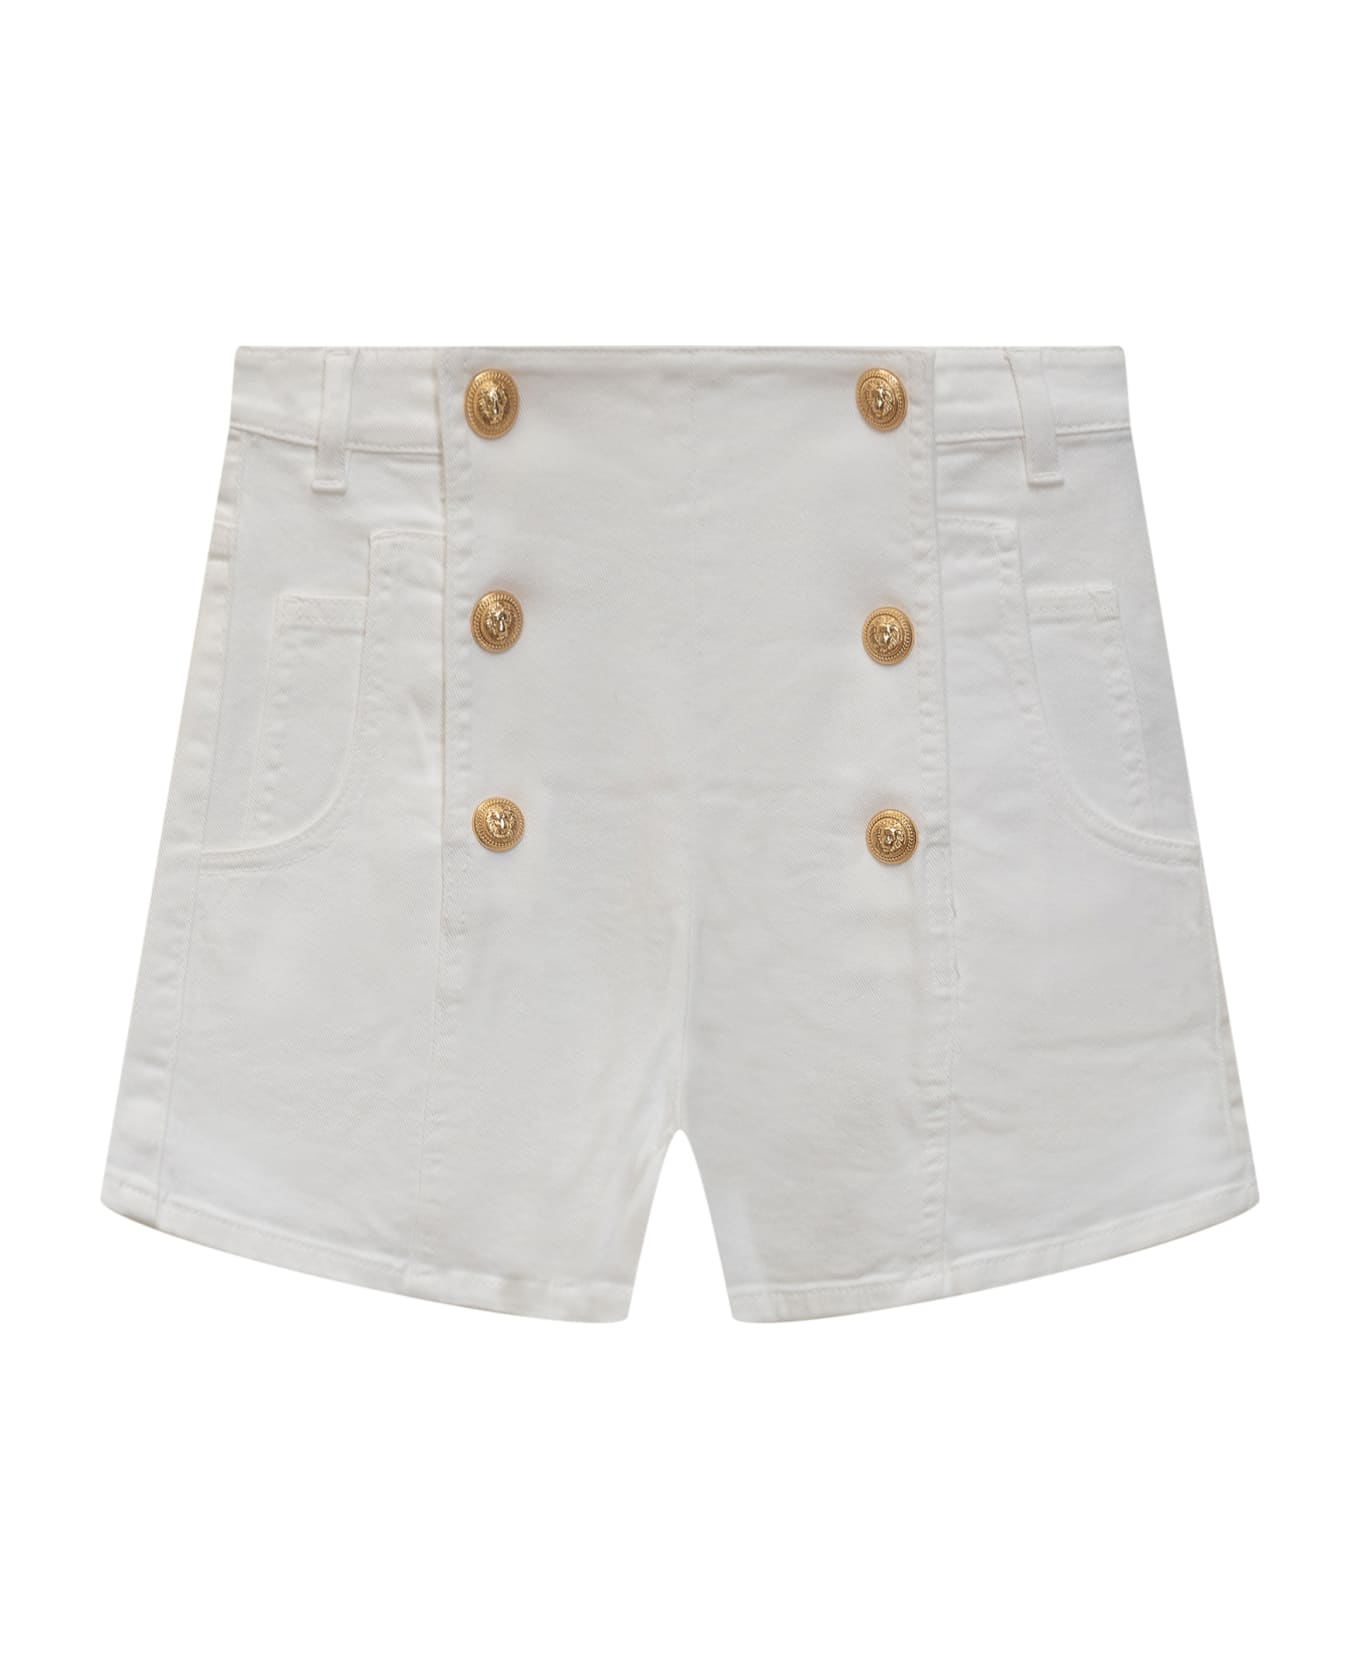 Balmain Logo Shorts - WHITE/GOLD